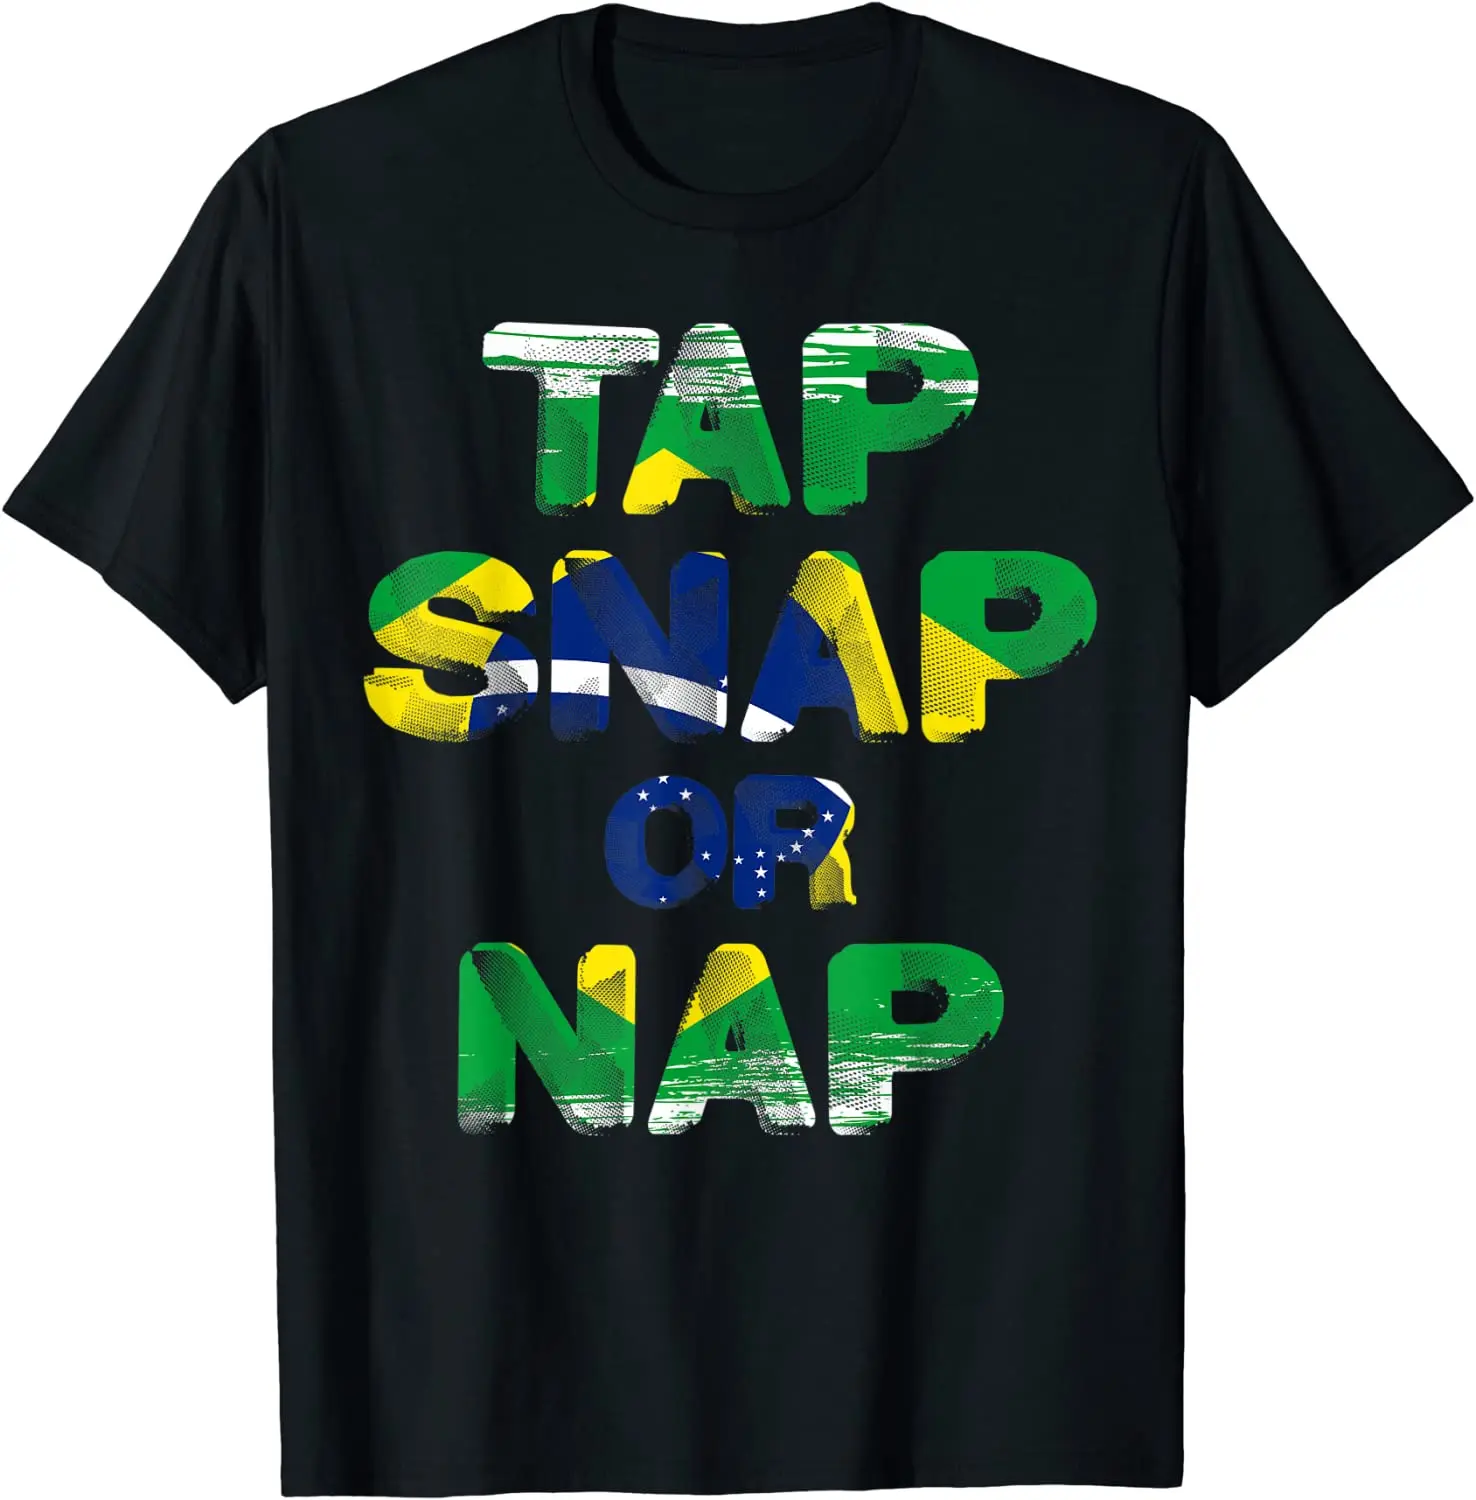 

Brazil Flag Tap, Snap, or Nap. BJJ Brazilian Jiu-Jitsu T Shirt. New 100% Cotton Short Sleeve O-Neck T-shirt Casual Mens Top